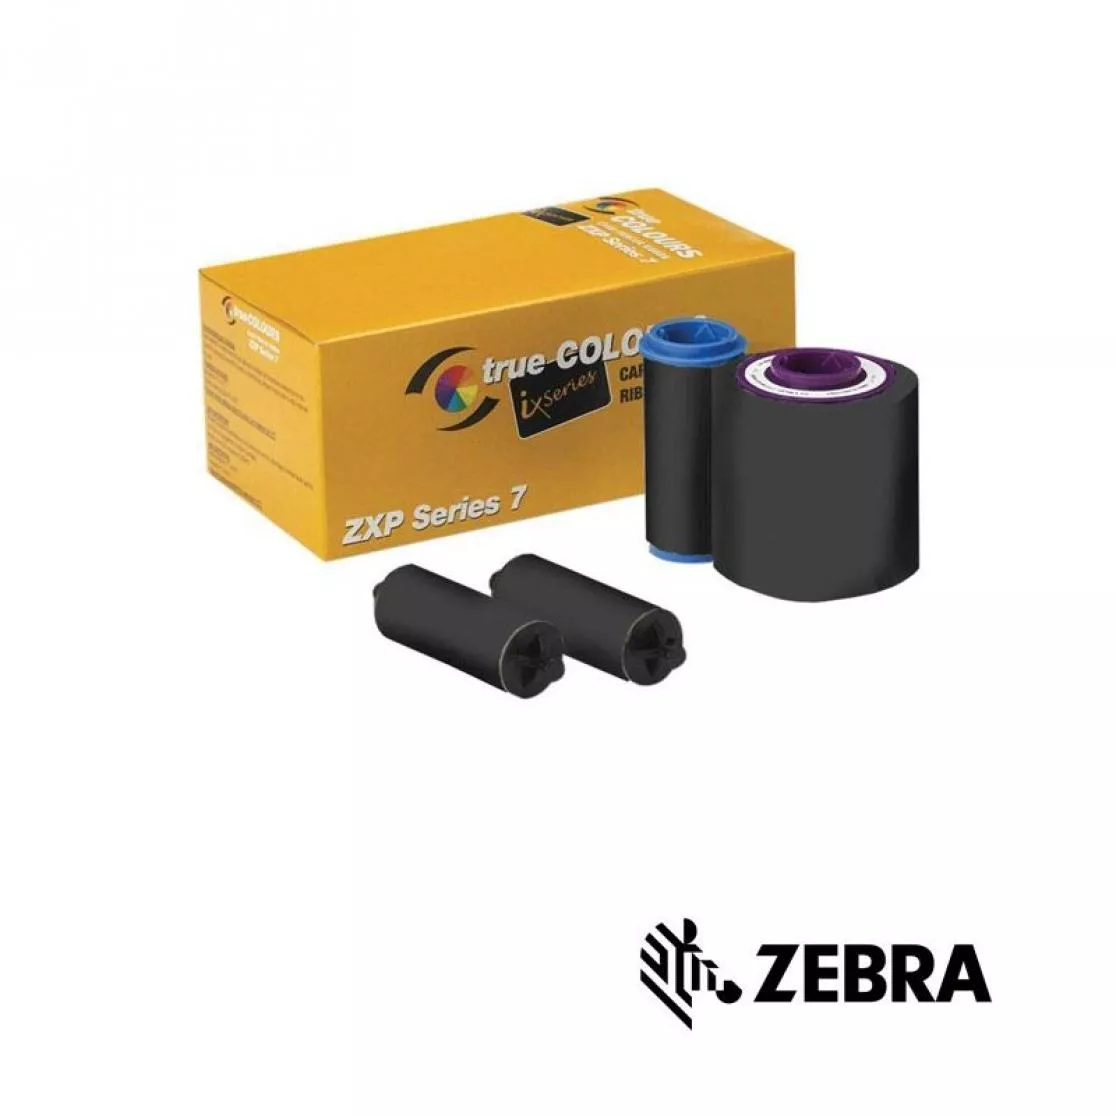 Zebra ZXP Series 7 ribbon black with overlay